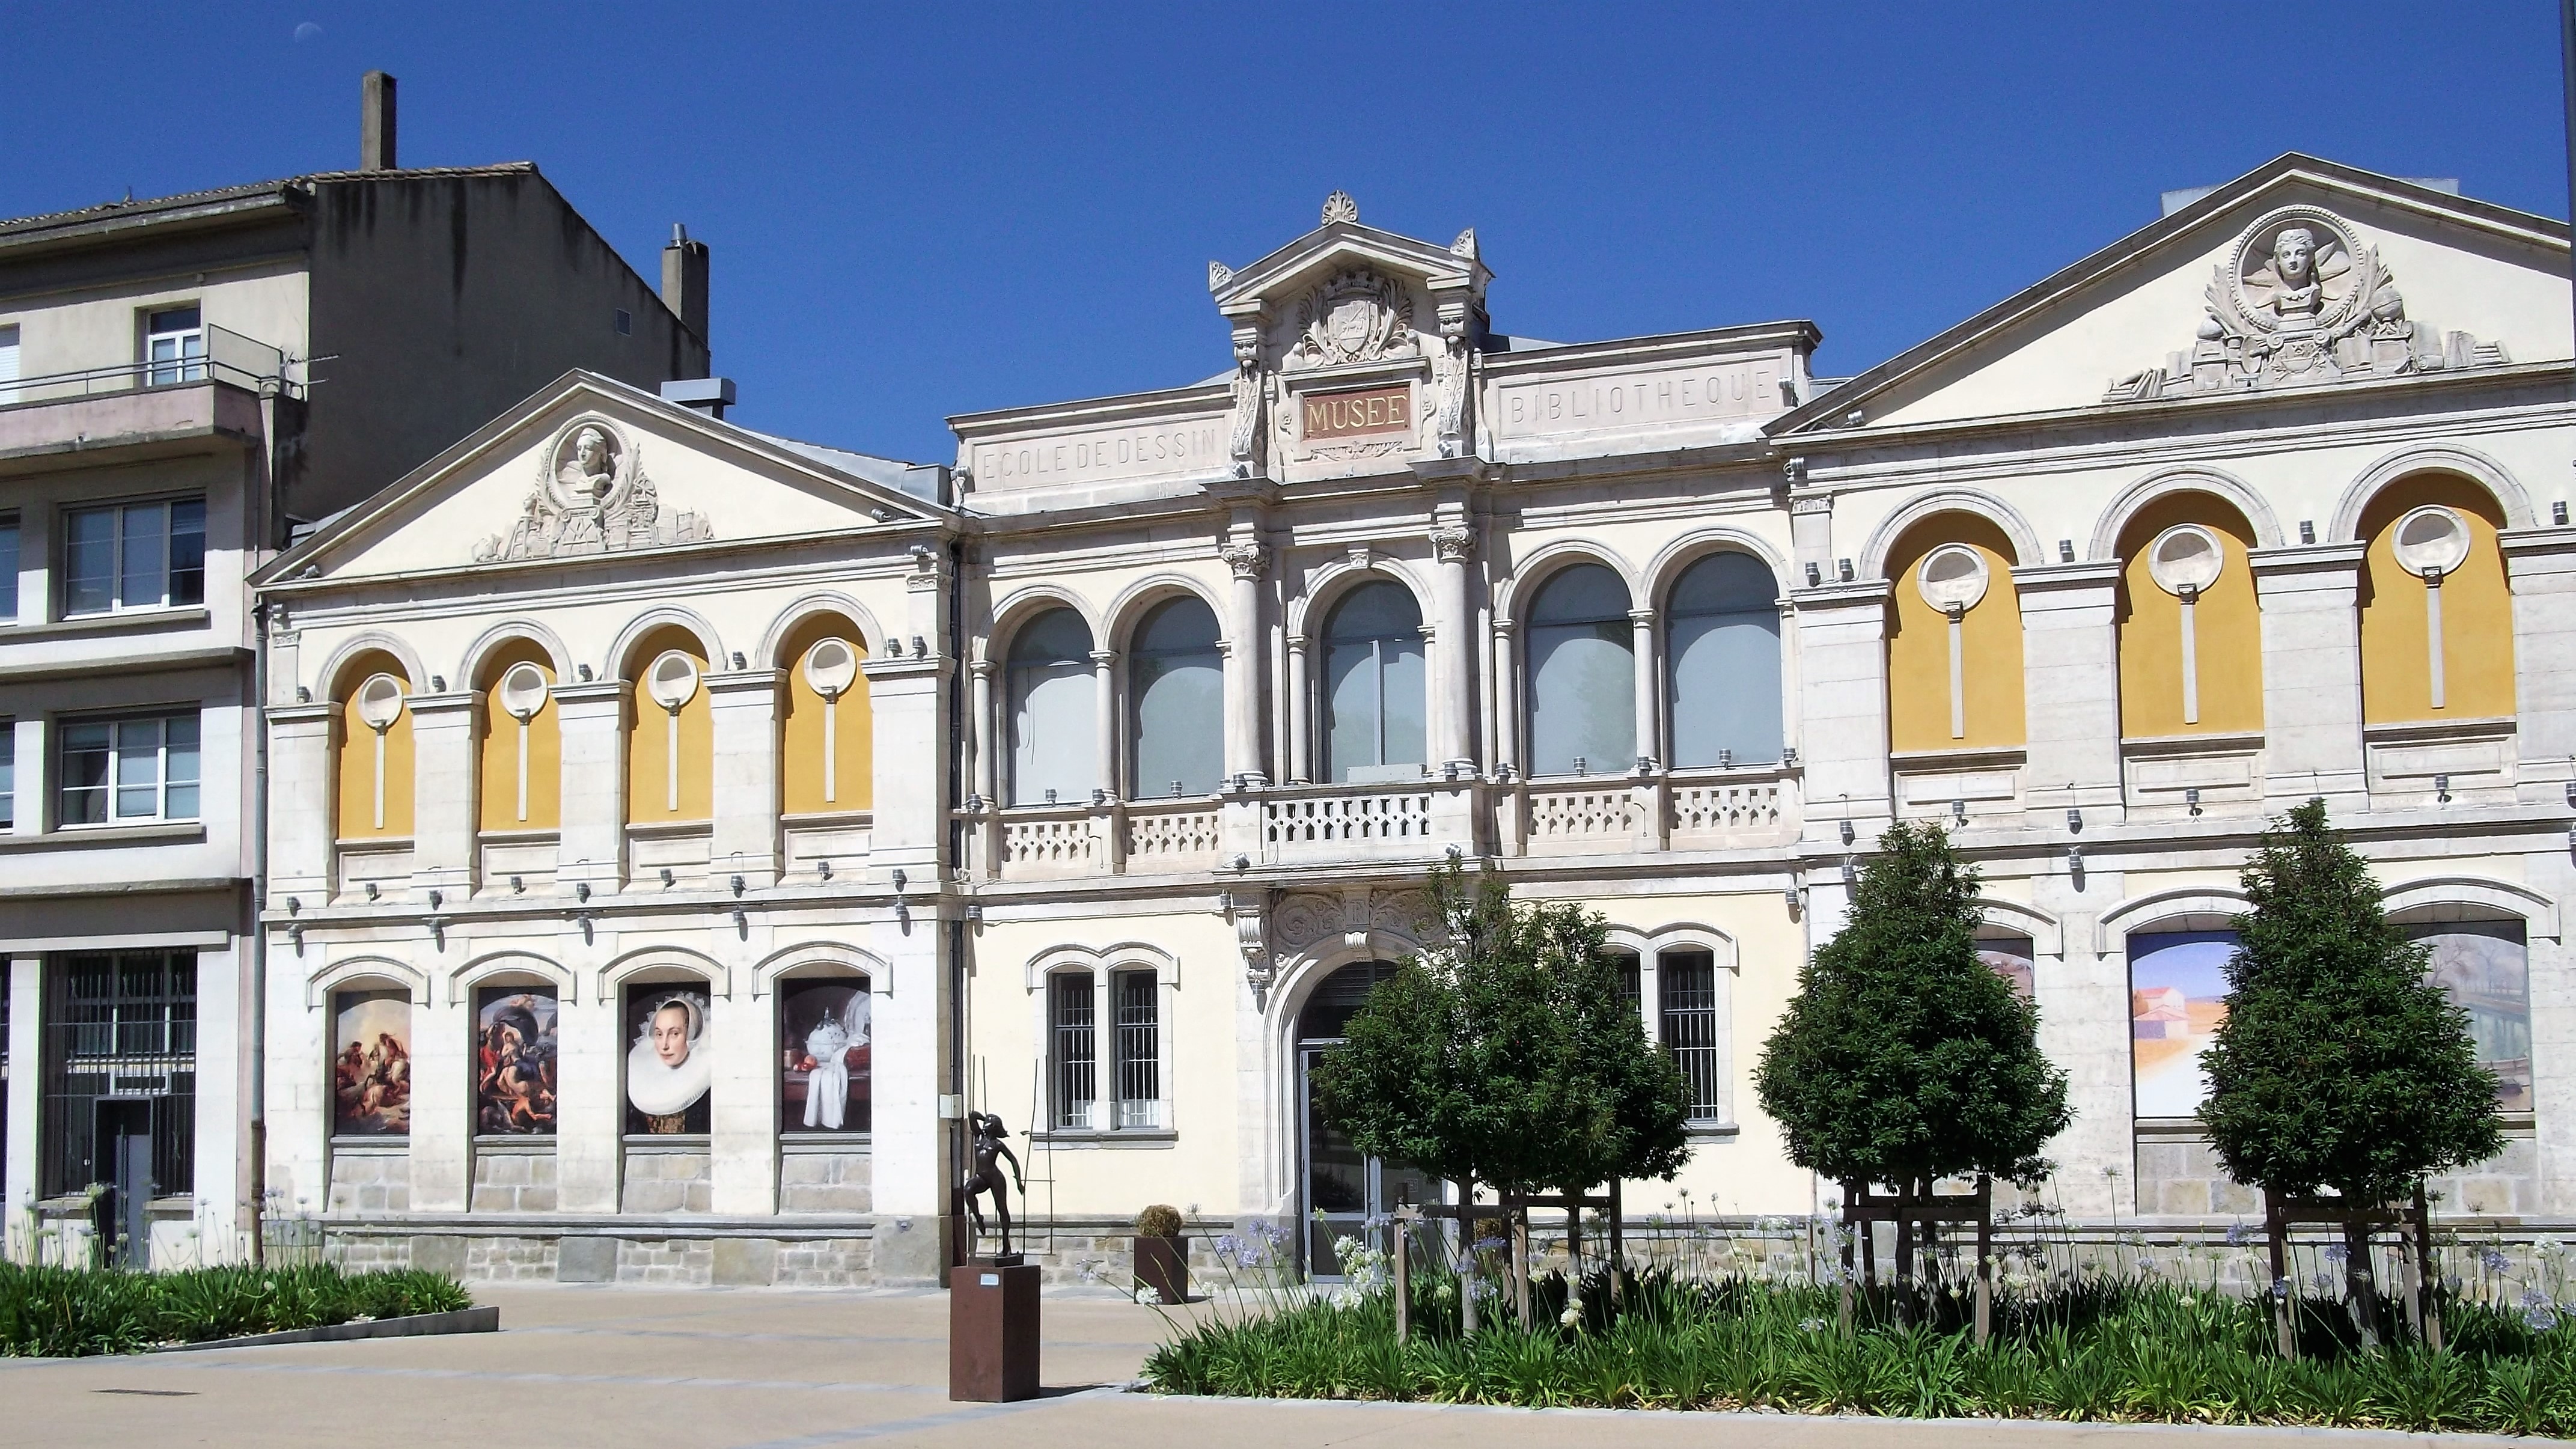 Carcasona-museo-de-bellas-artes-donviajon-cultura-occitania-francia